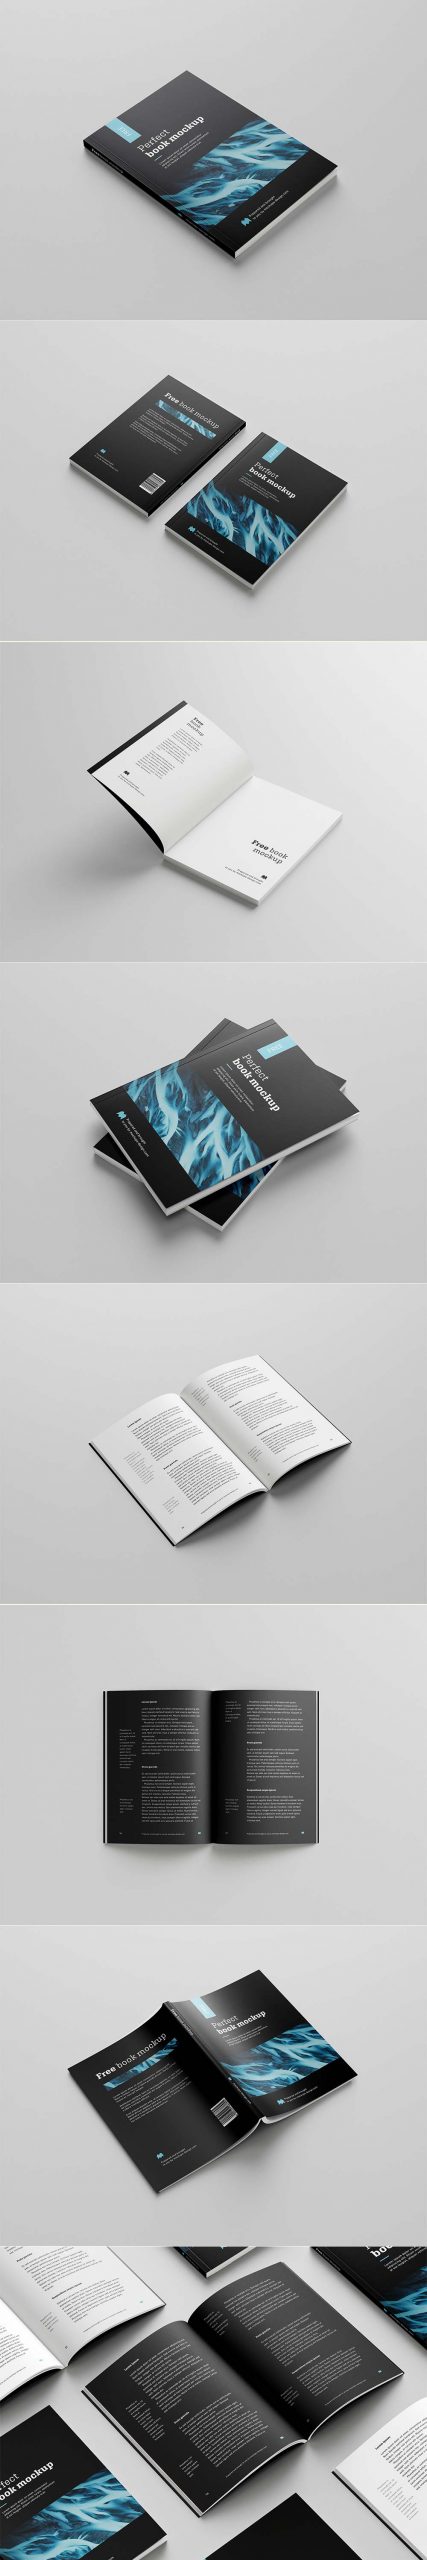 Paperback Book Mockup Free Download